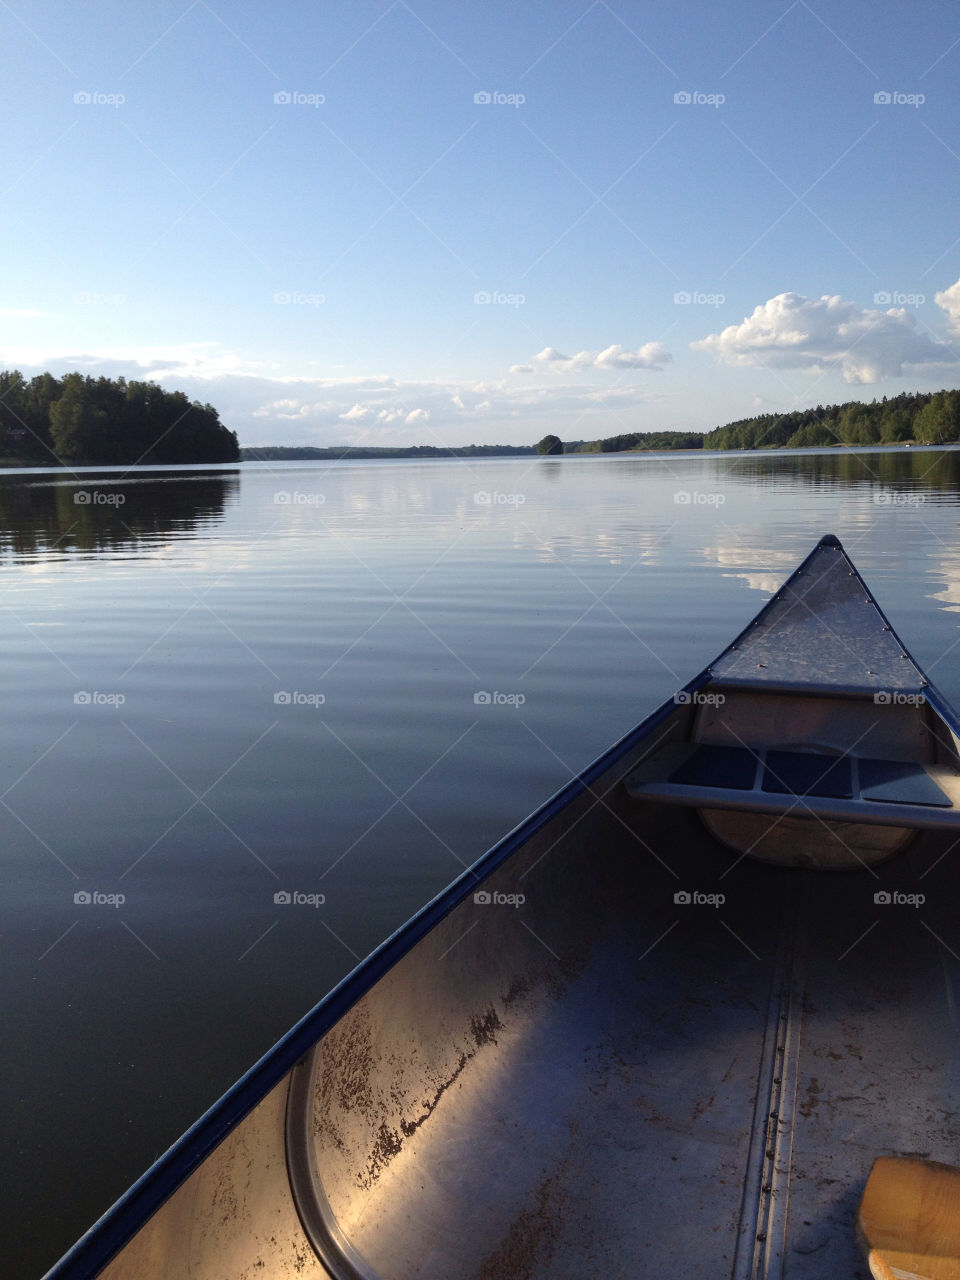 The calmness of canoeing